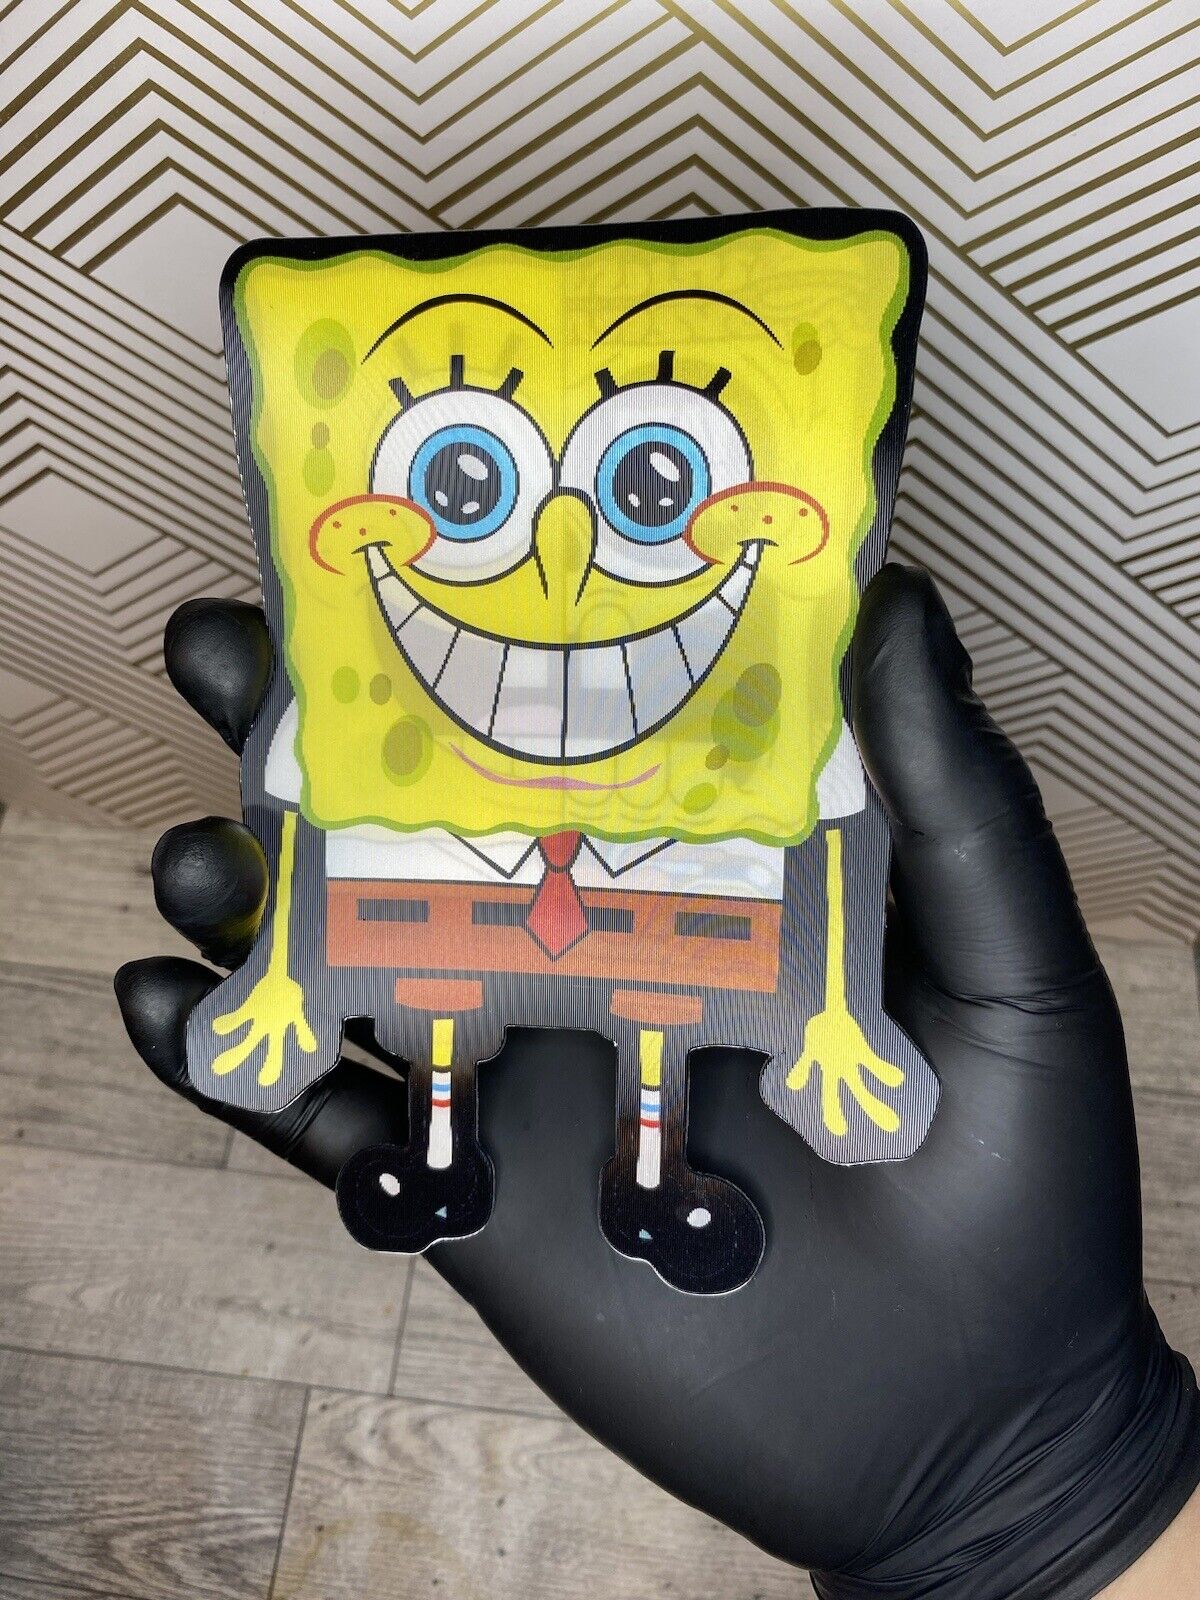 Spongebob Squarepants 3D Lenticular Motion Car Sticker Decal Nickelodeon